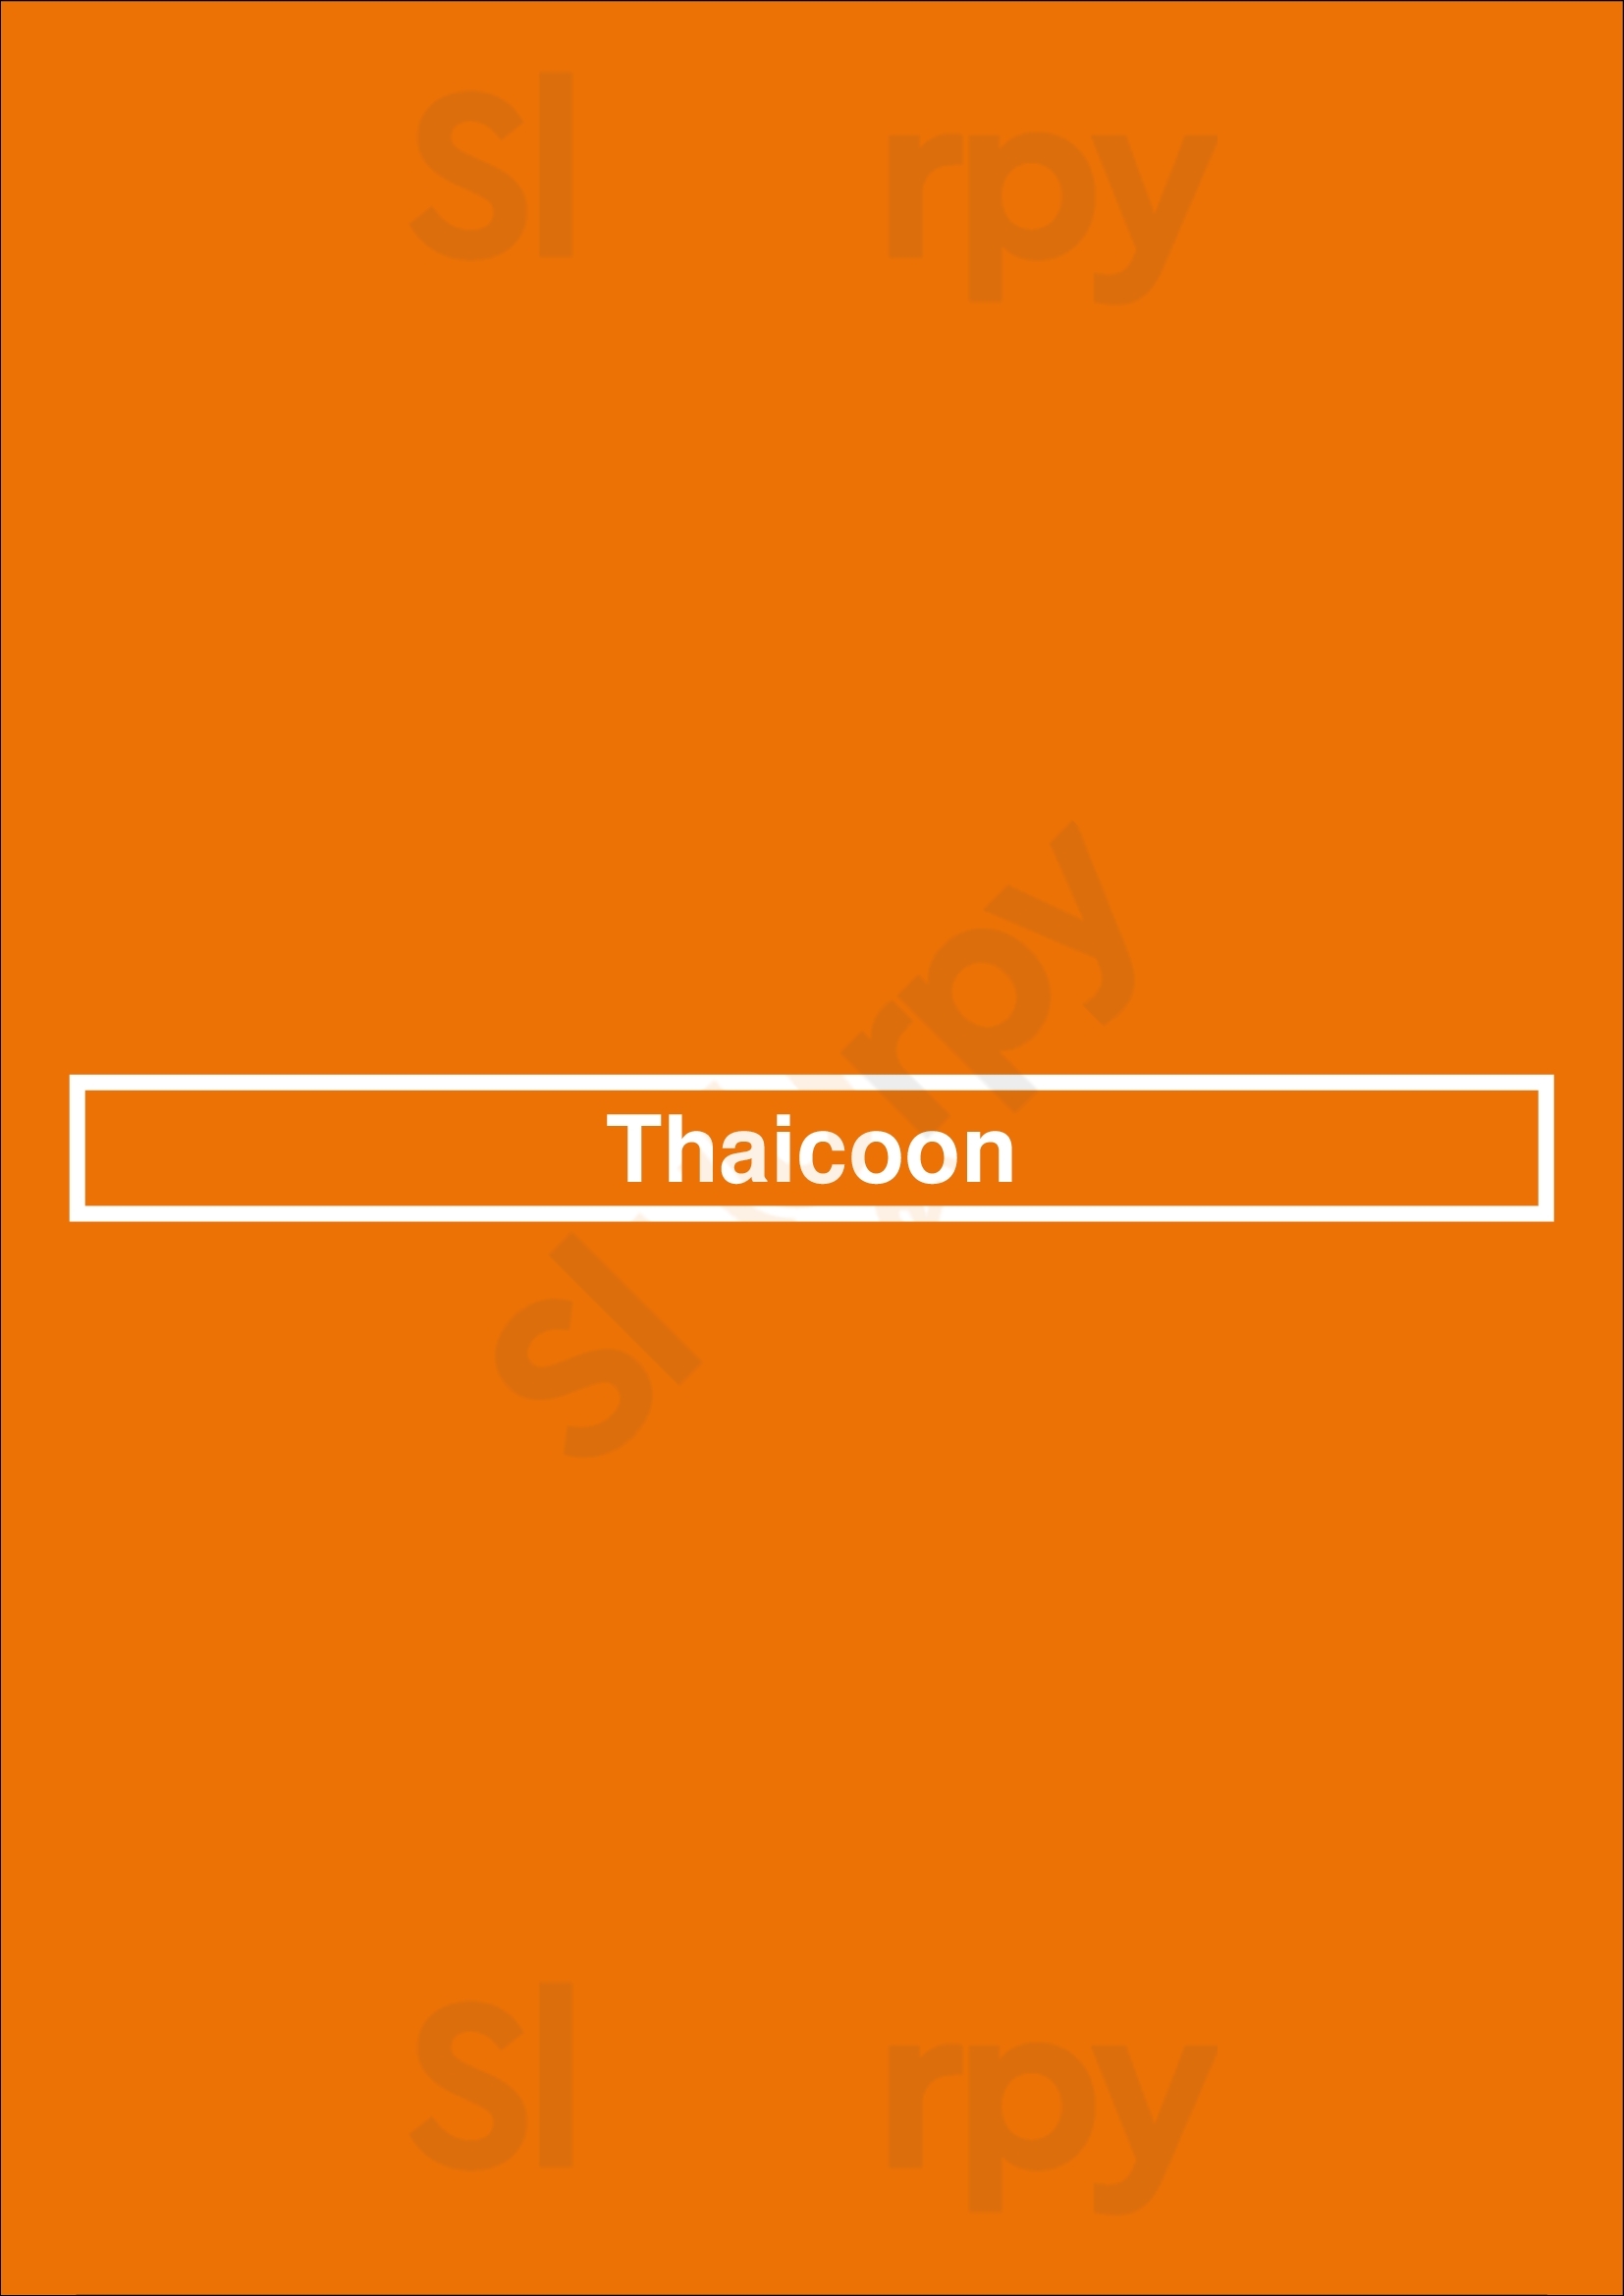 Thaicoon Amsterdam Menu - 1